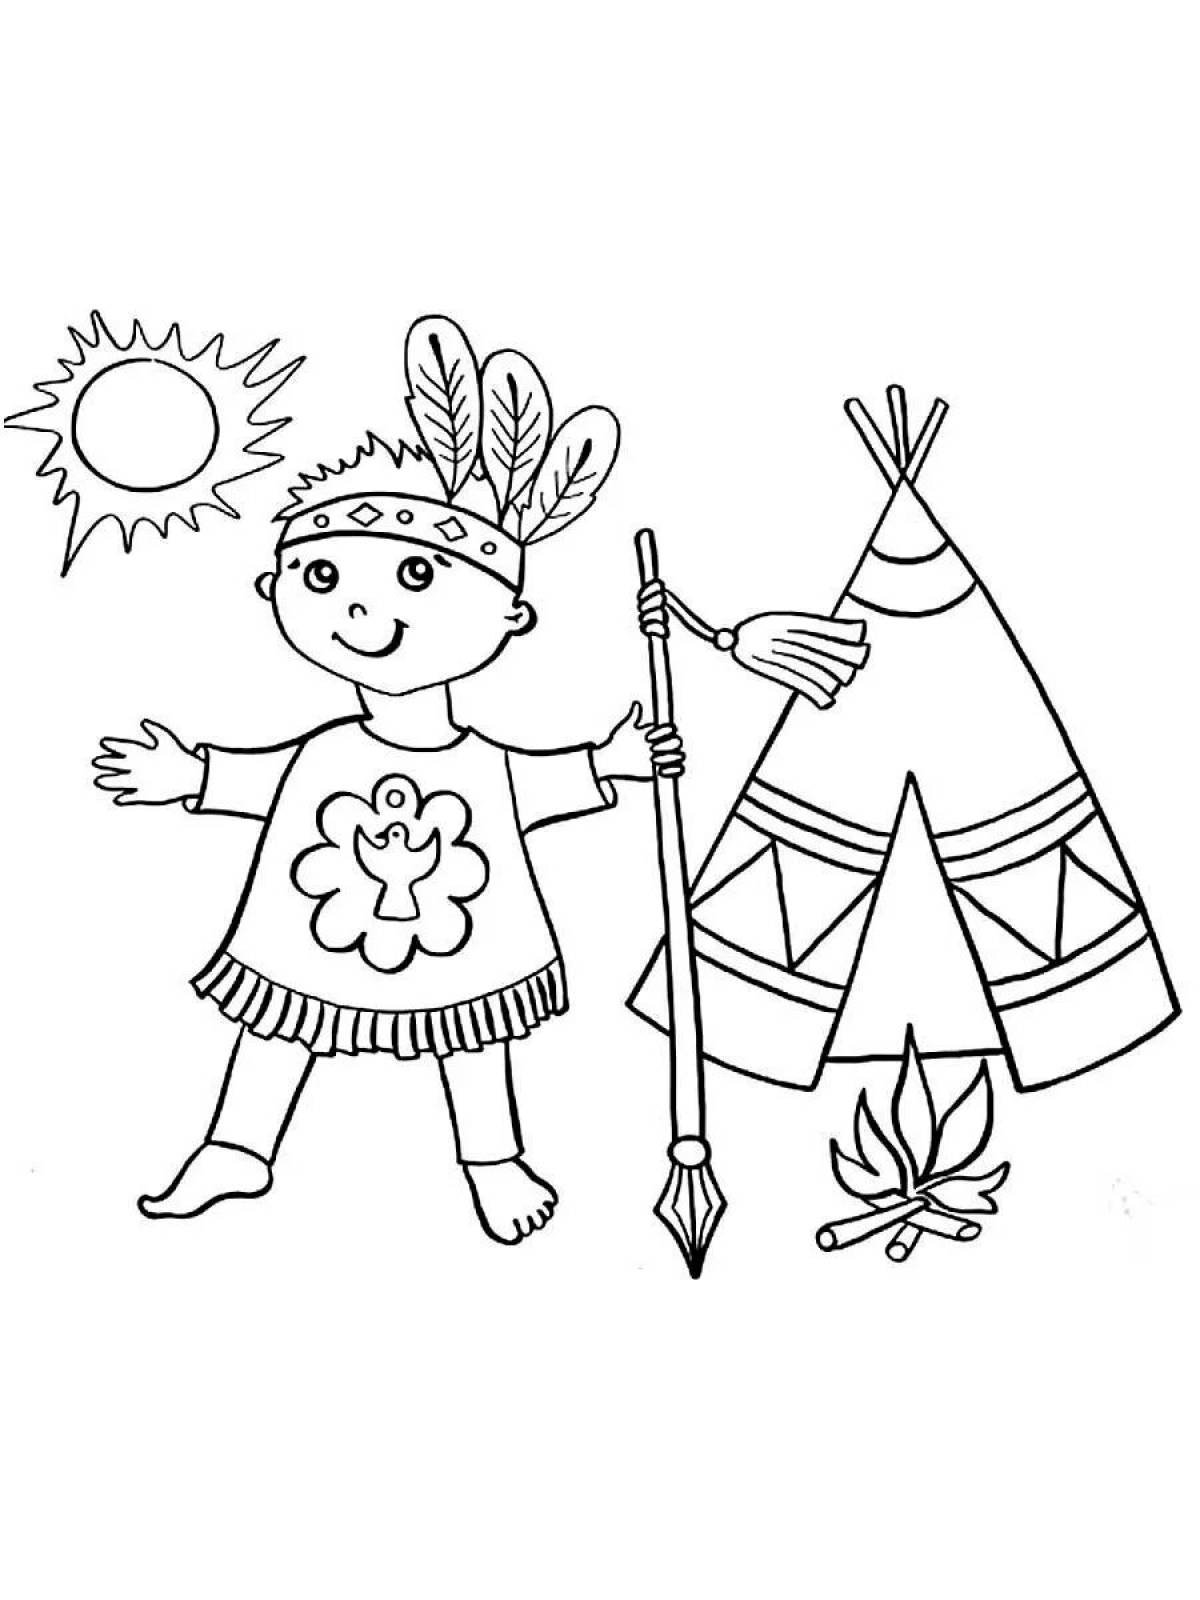 Великолепная саамская раскраска для малышей